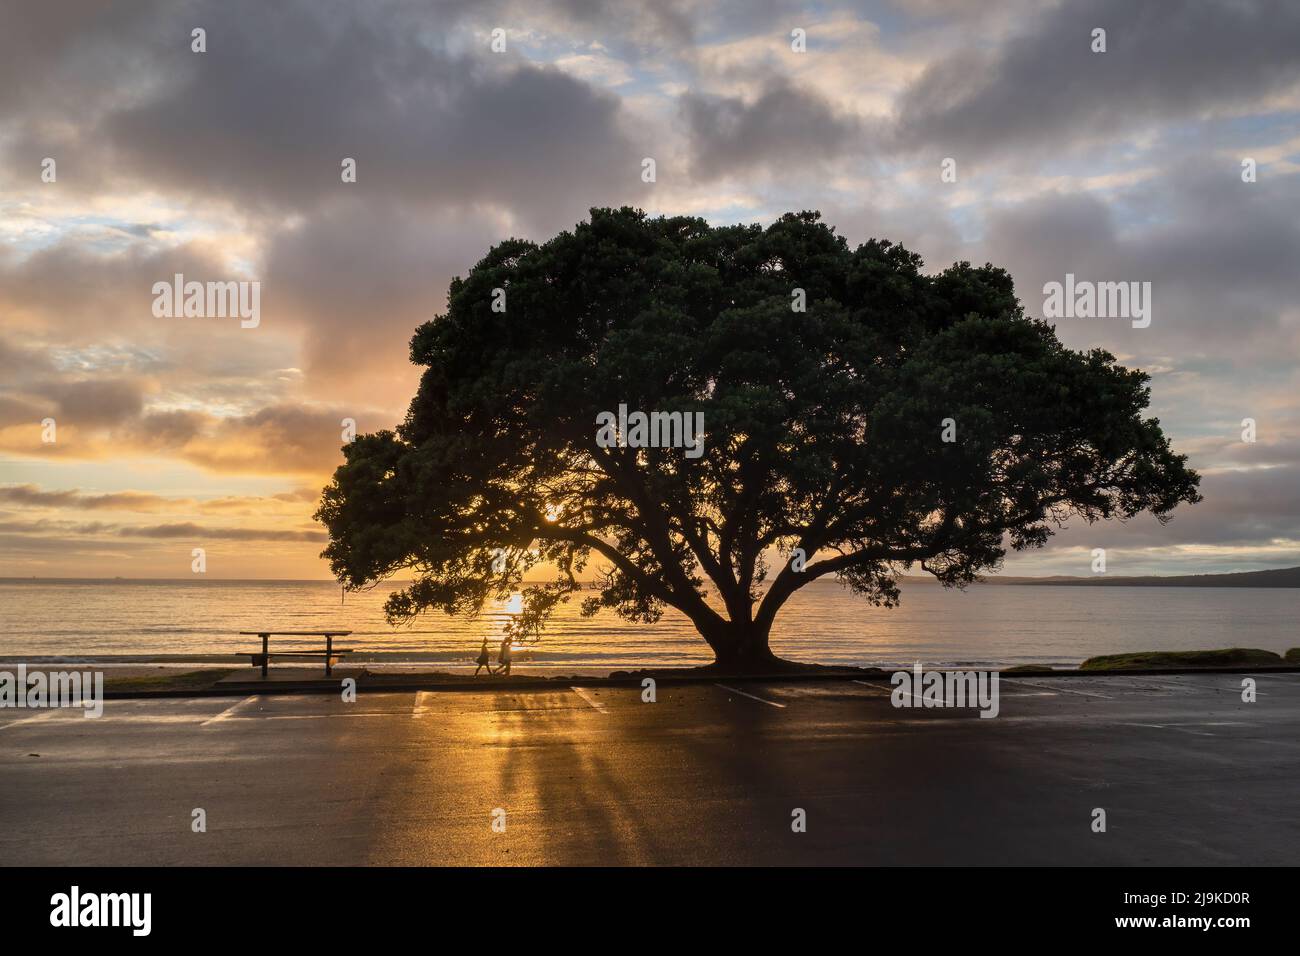 People walking on a beach, Sun shining through a giant Pohutukawa tree, Auckland. Stock Photo